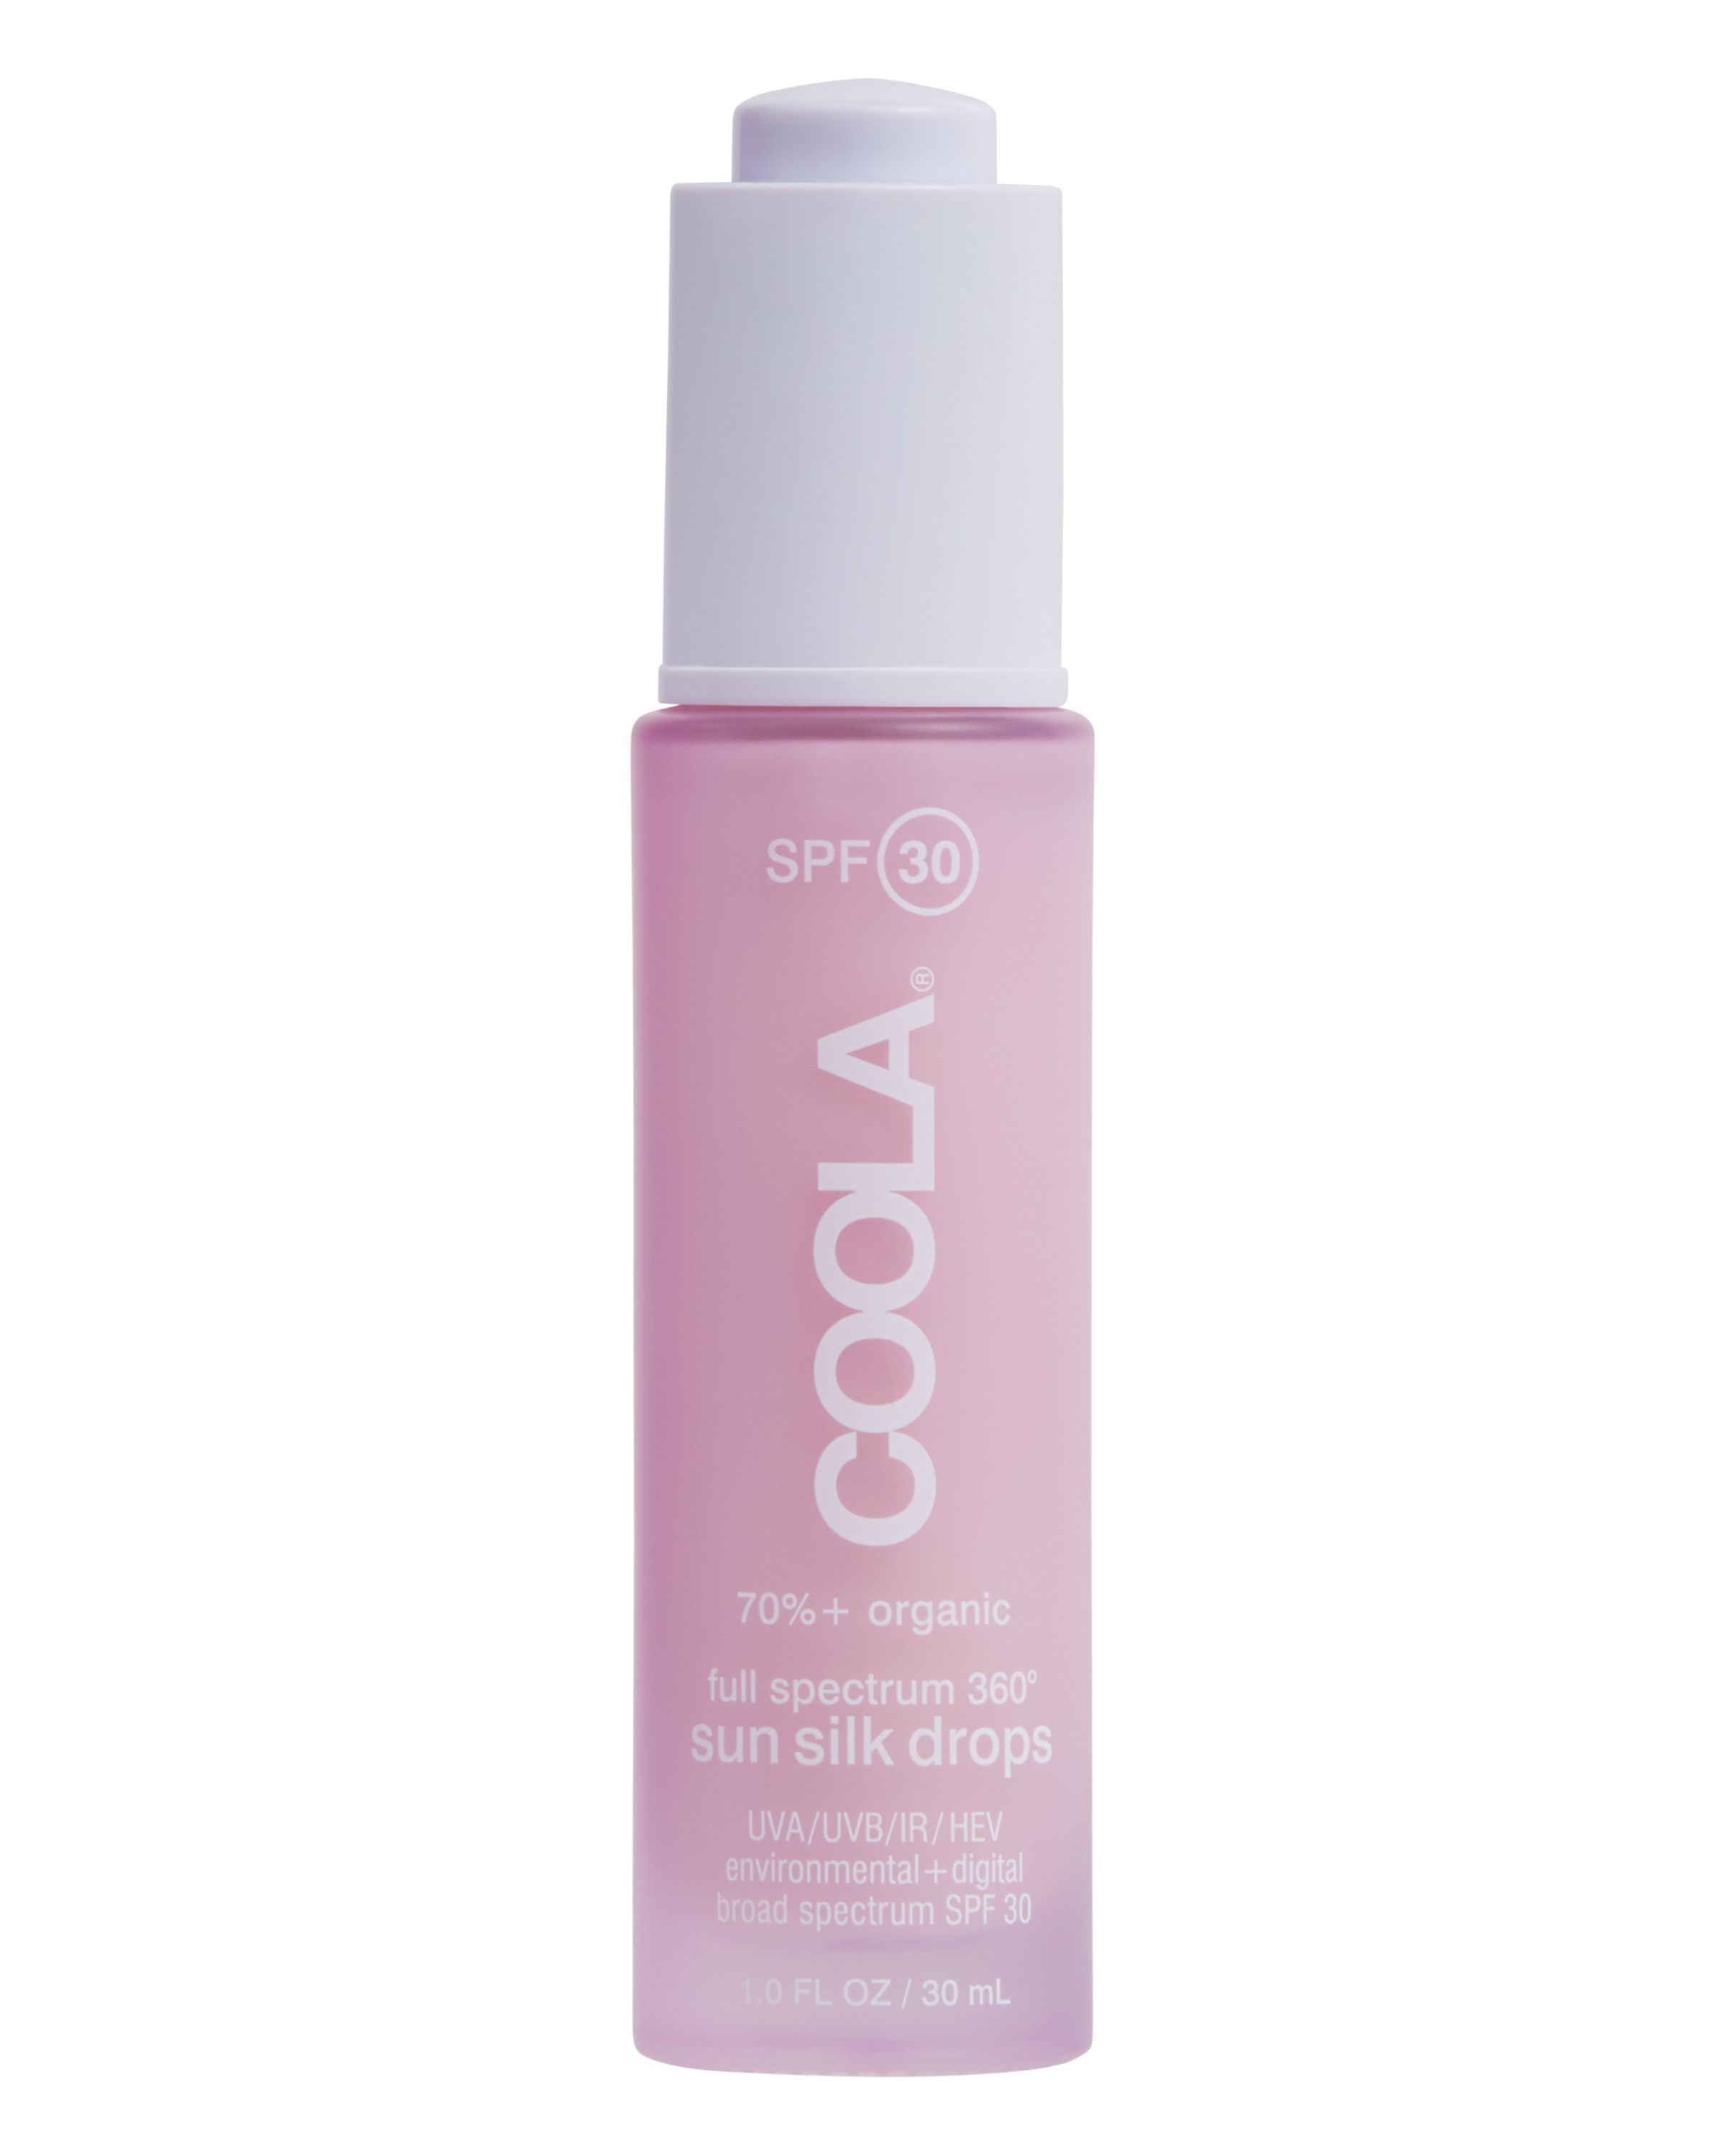 COOLA Full Spectrum 360° Sun Silk Drops Organic Face Sunscreen, SPF 30 - 1 fl oz